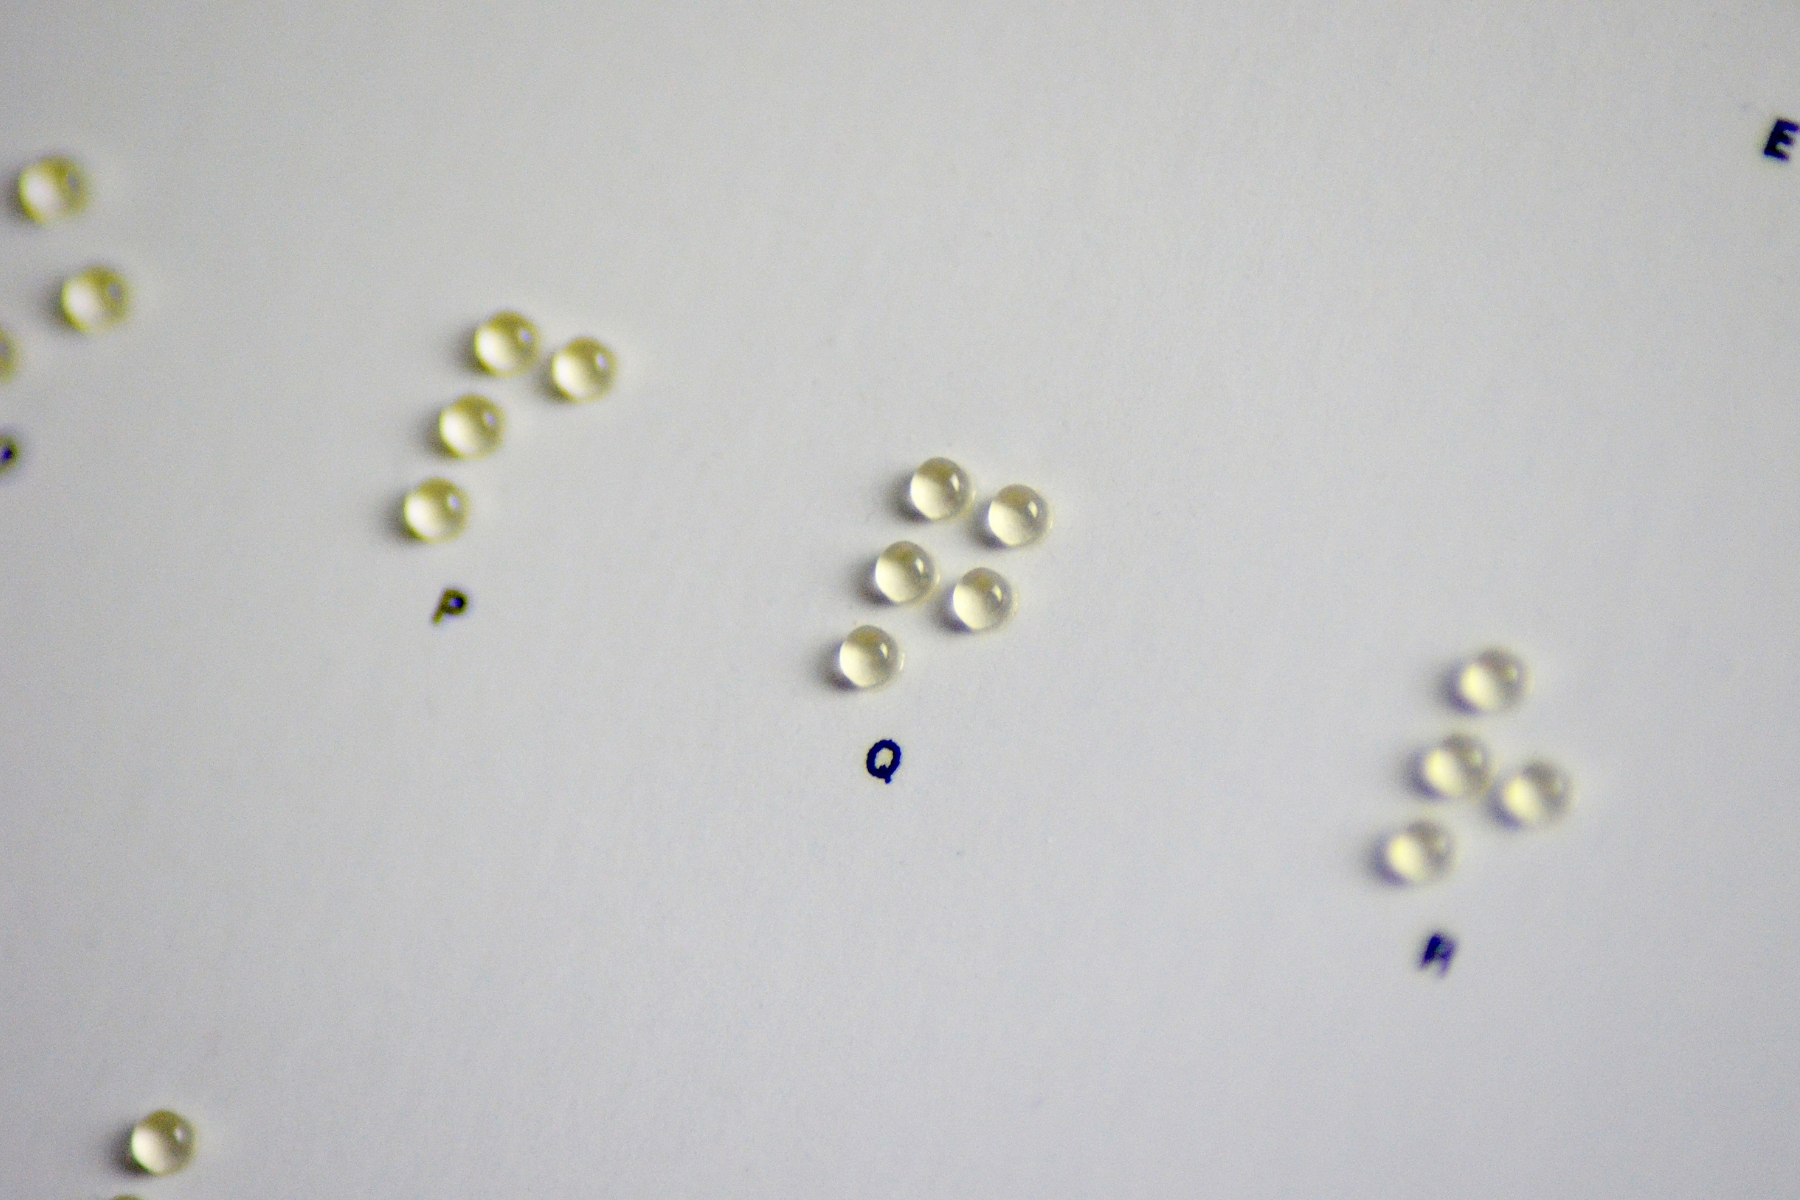 Mimaki digitally printed Braille